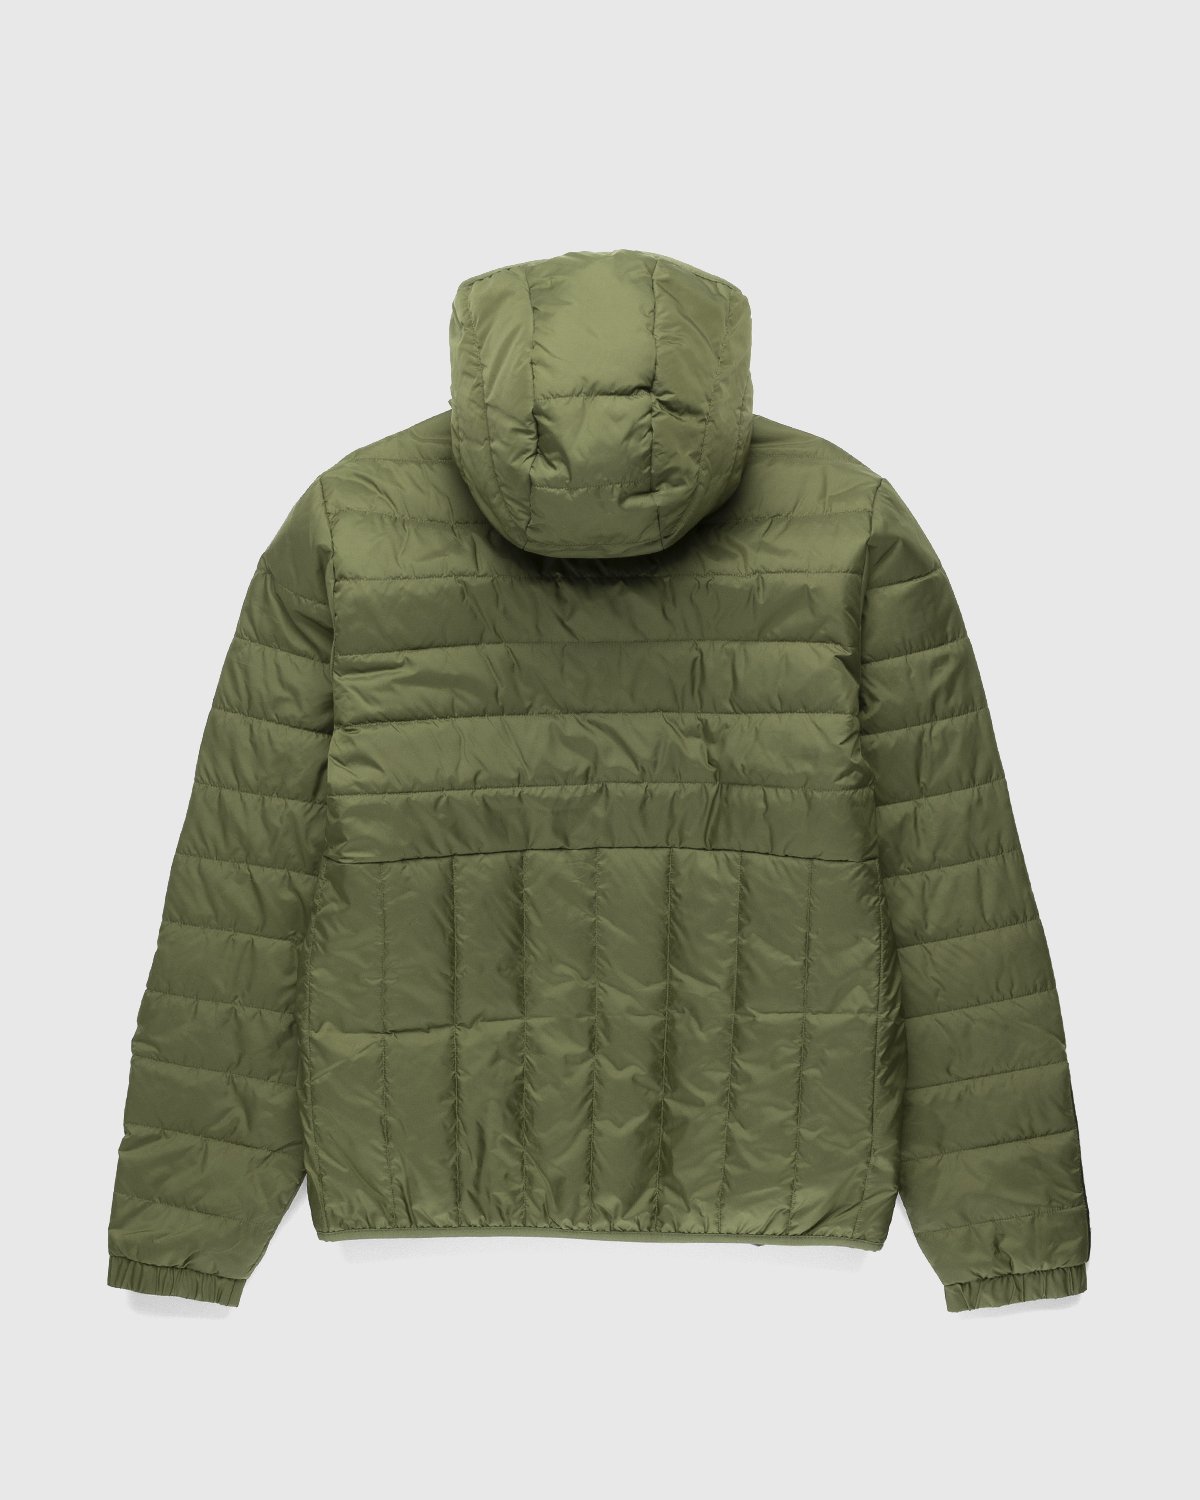 Adidas - Itavic 3-Stripes Midweight Hooded Jacket Olive - Clothing - Green - Image 2